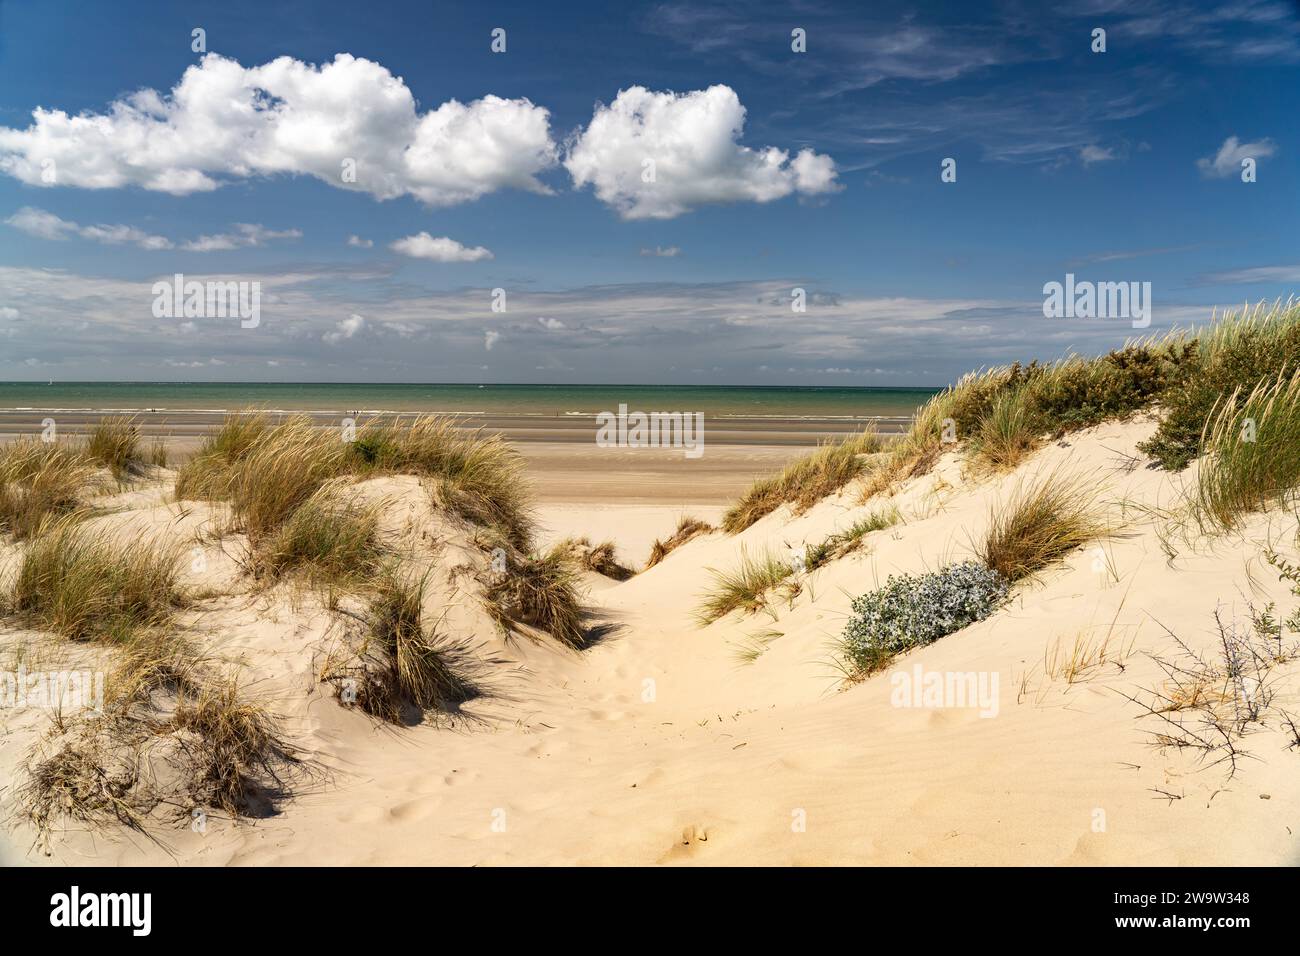 Duenen am Strand von Leffrinckoucke an der Côte d’Opale oder Opalküste, Frankreich  |  Leffrinckoucke beach dunes at the Opal Coast or Côte d'Opale, F Stock Photo